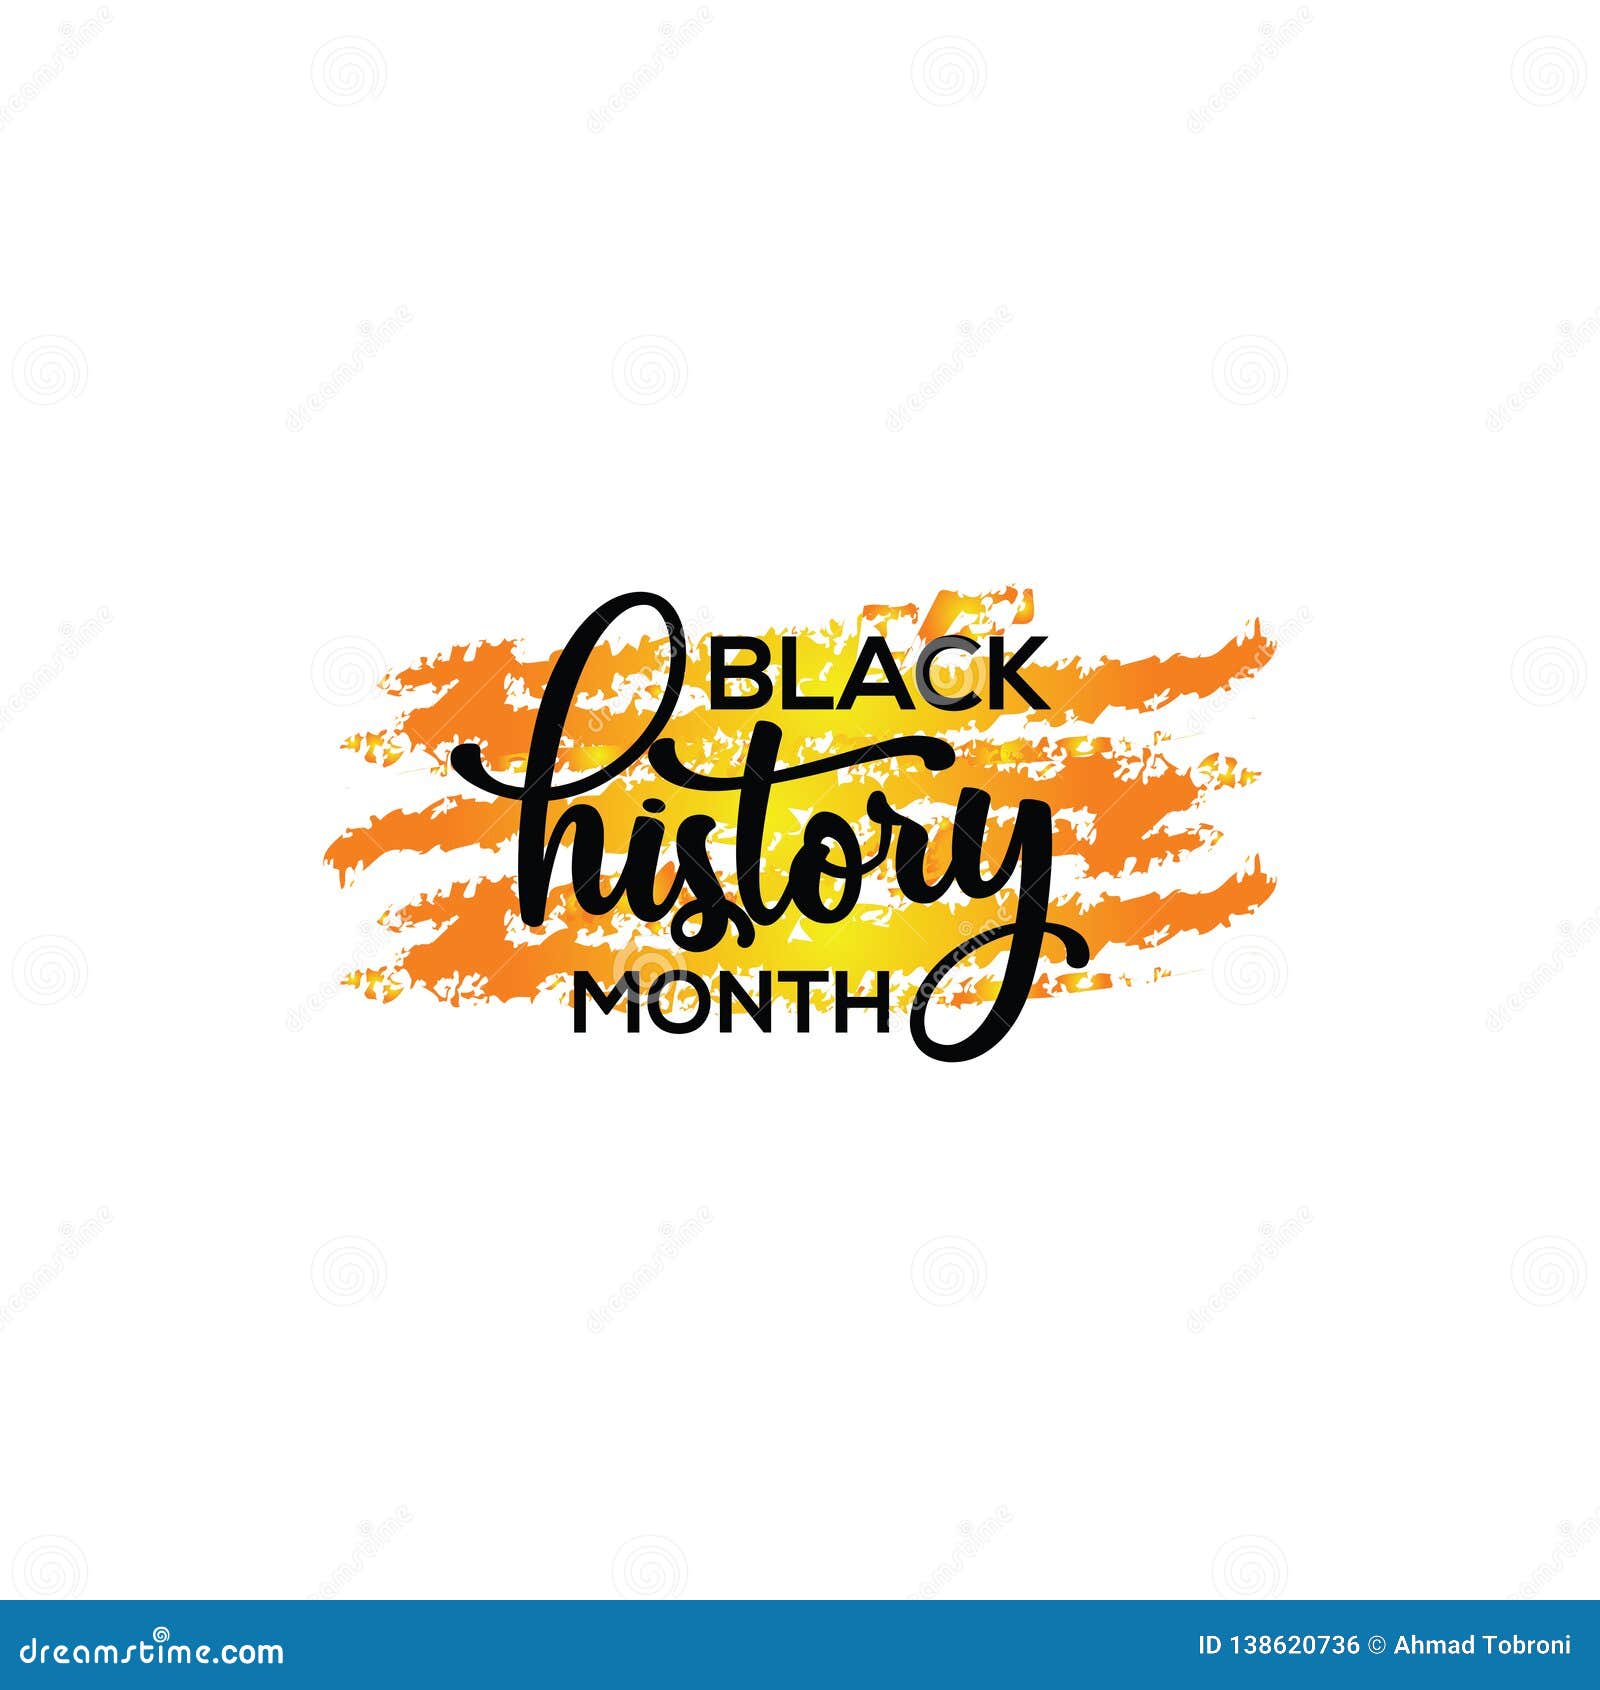 black-history-month-vector-template-design-illustration-stock-vector